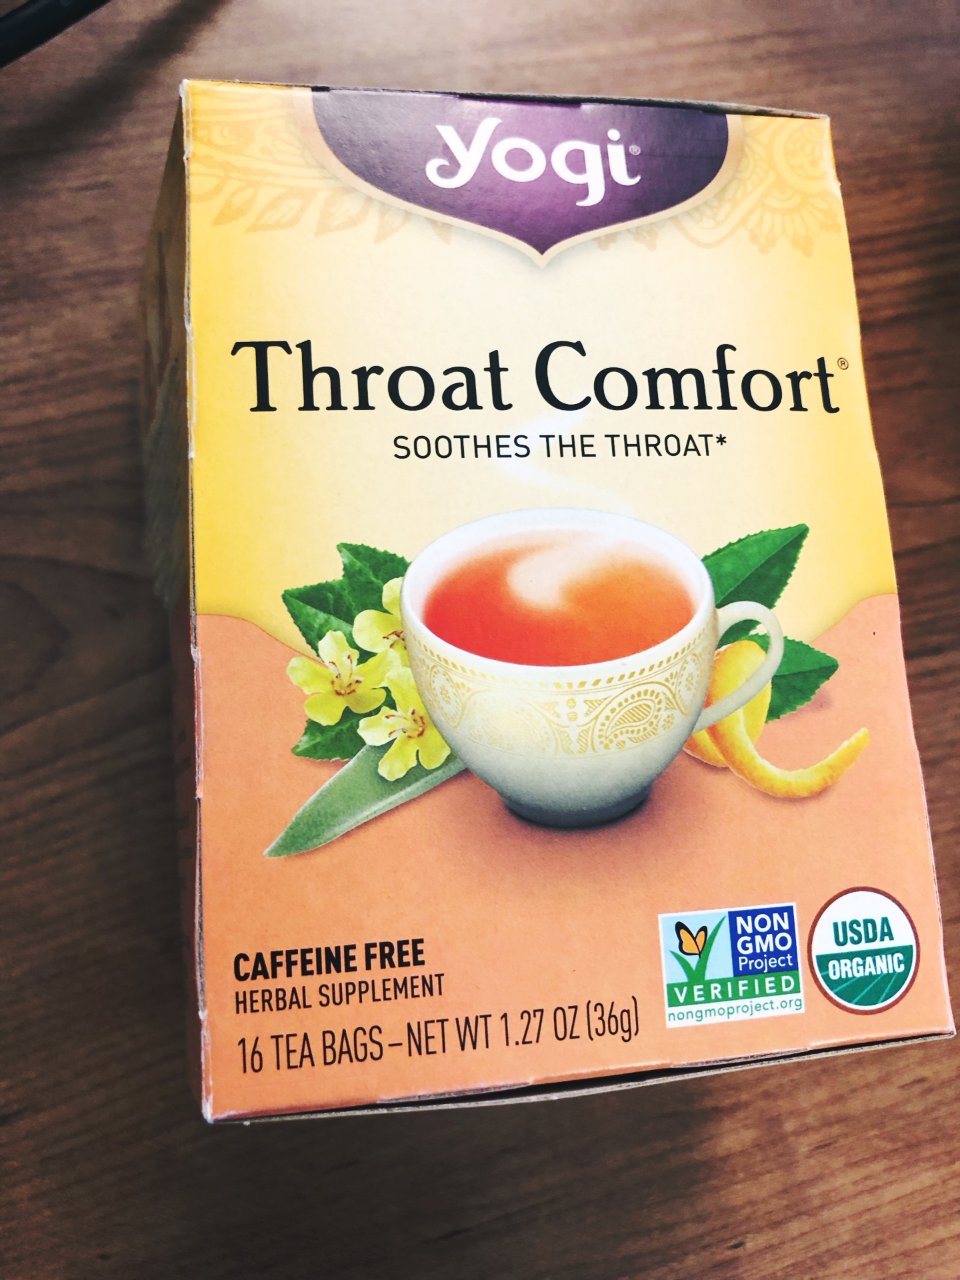 Yogi throat comfort茶...